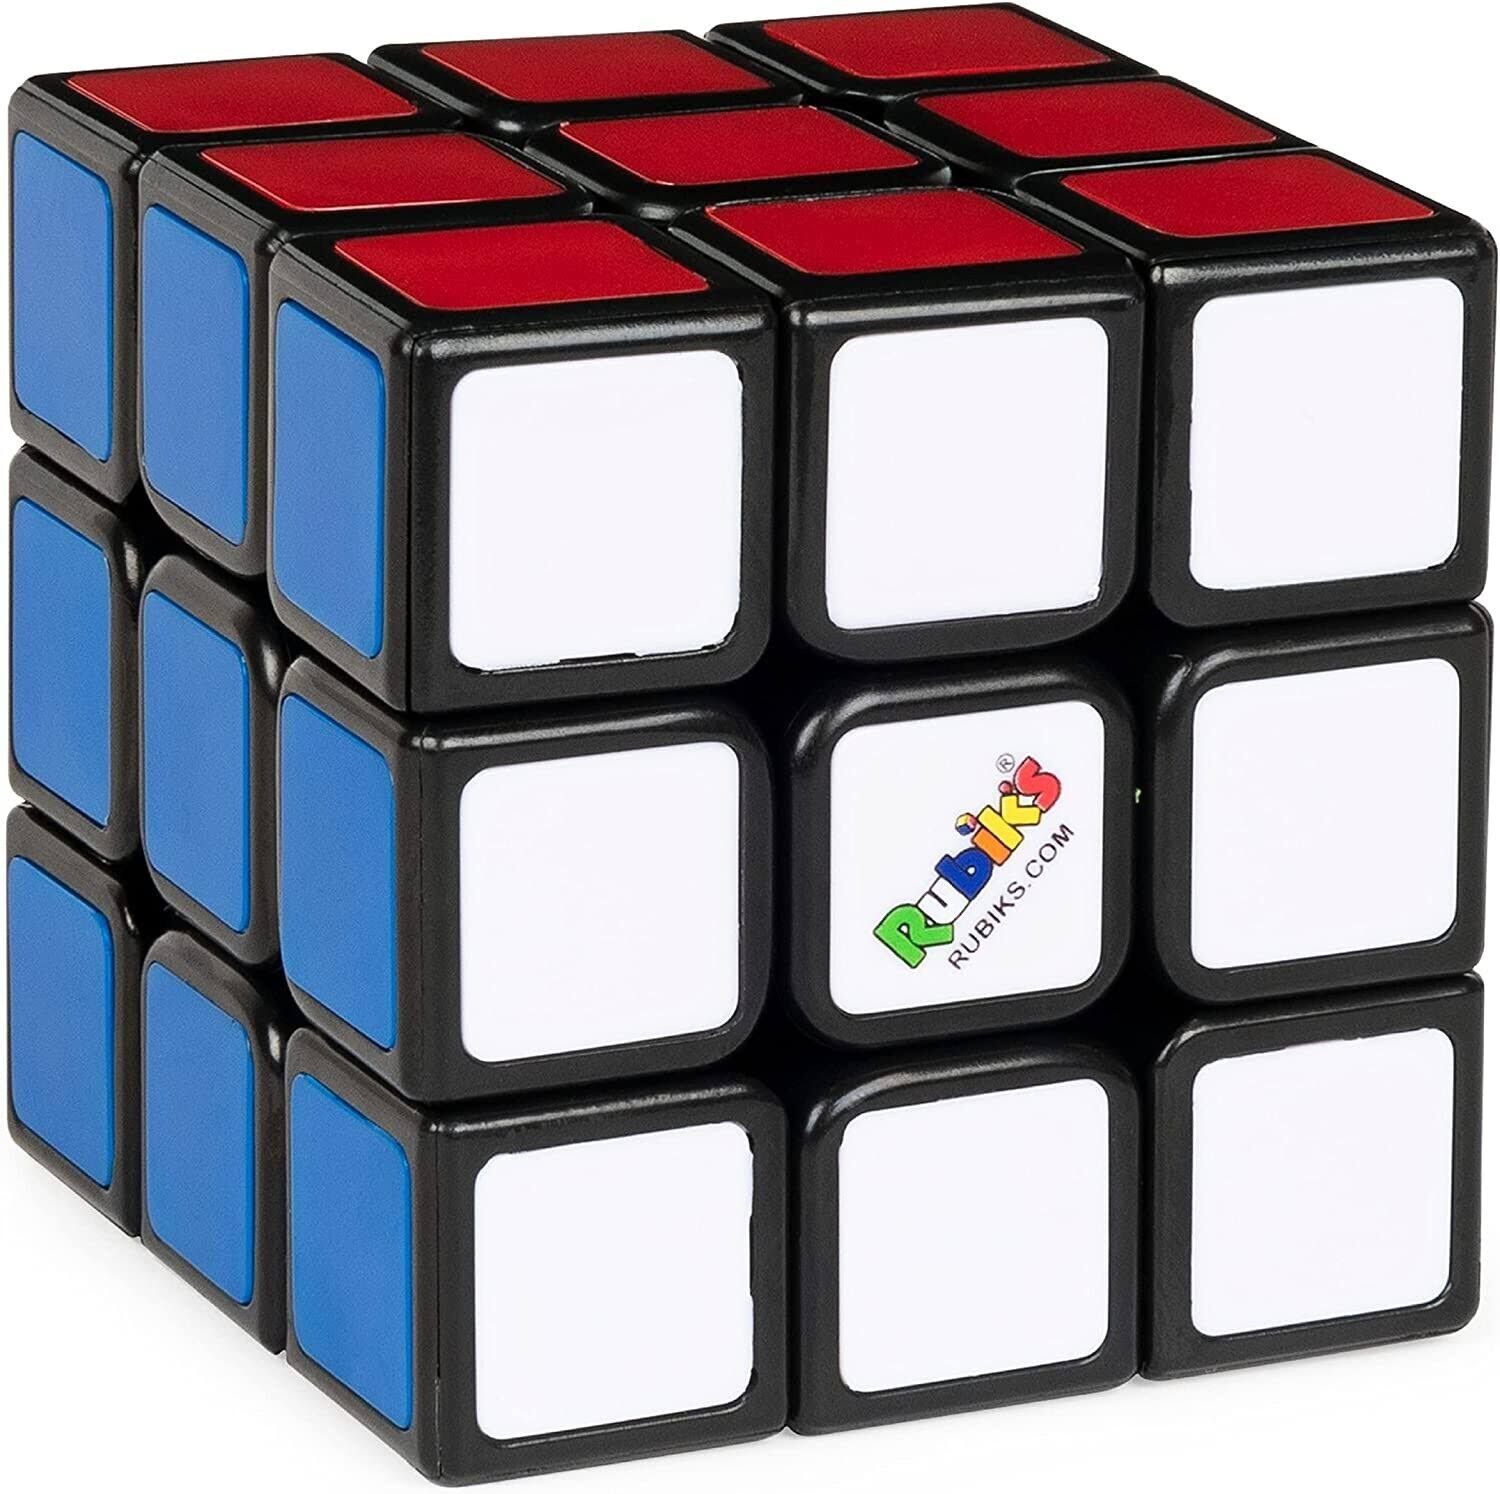 The Original Rubik's Cube: 3X3